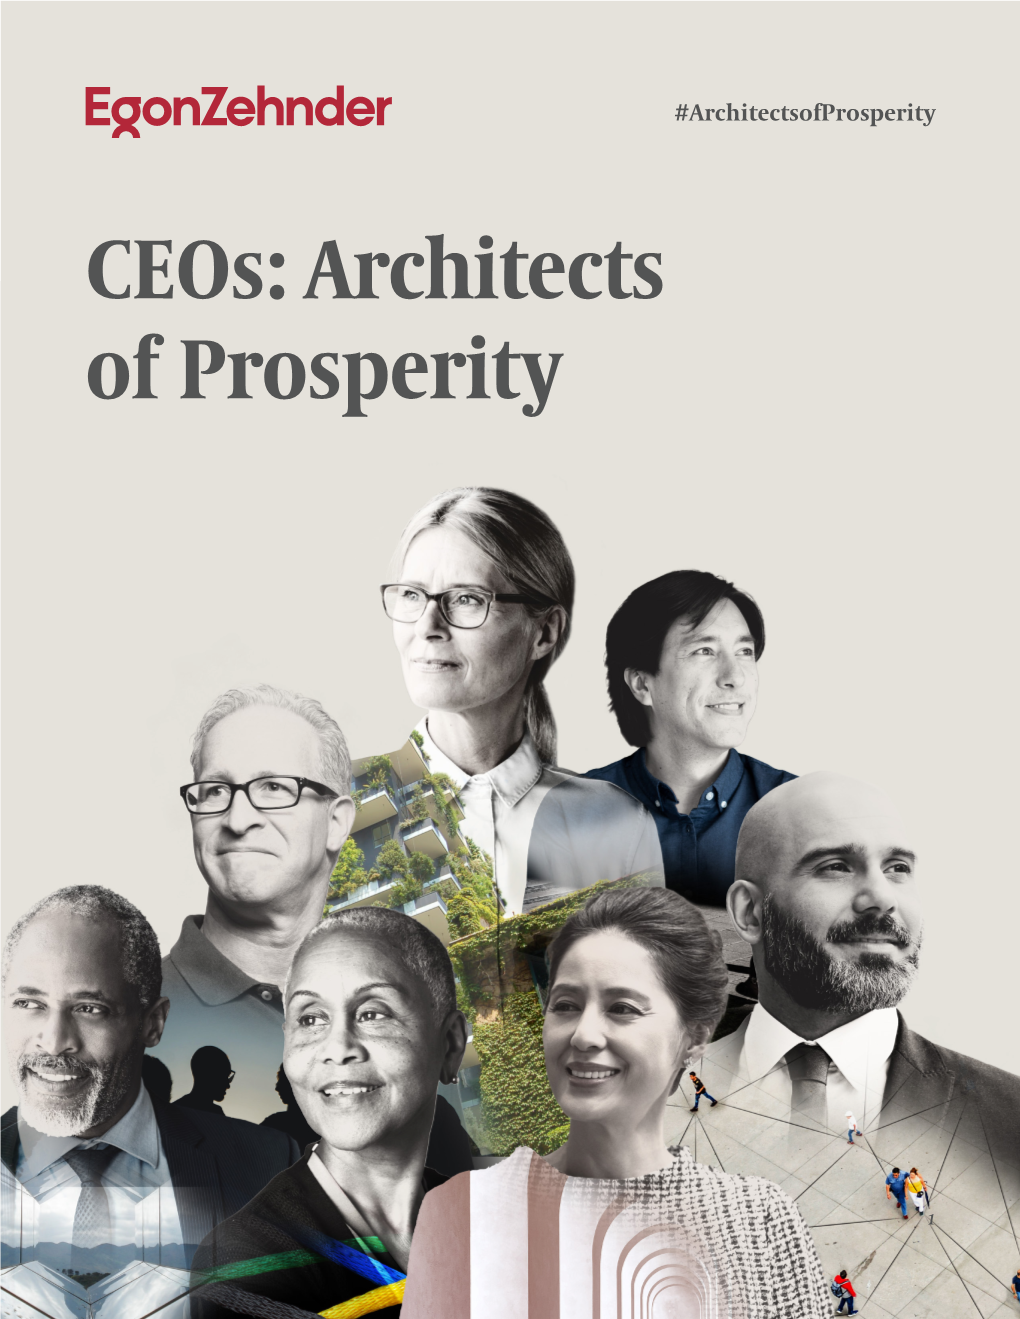 Ceos: Architects of Prosperity